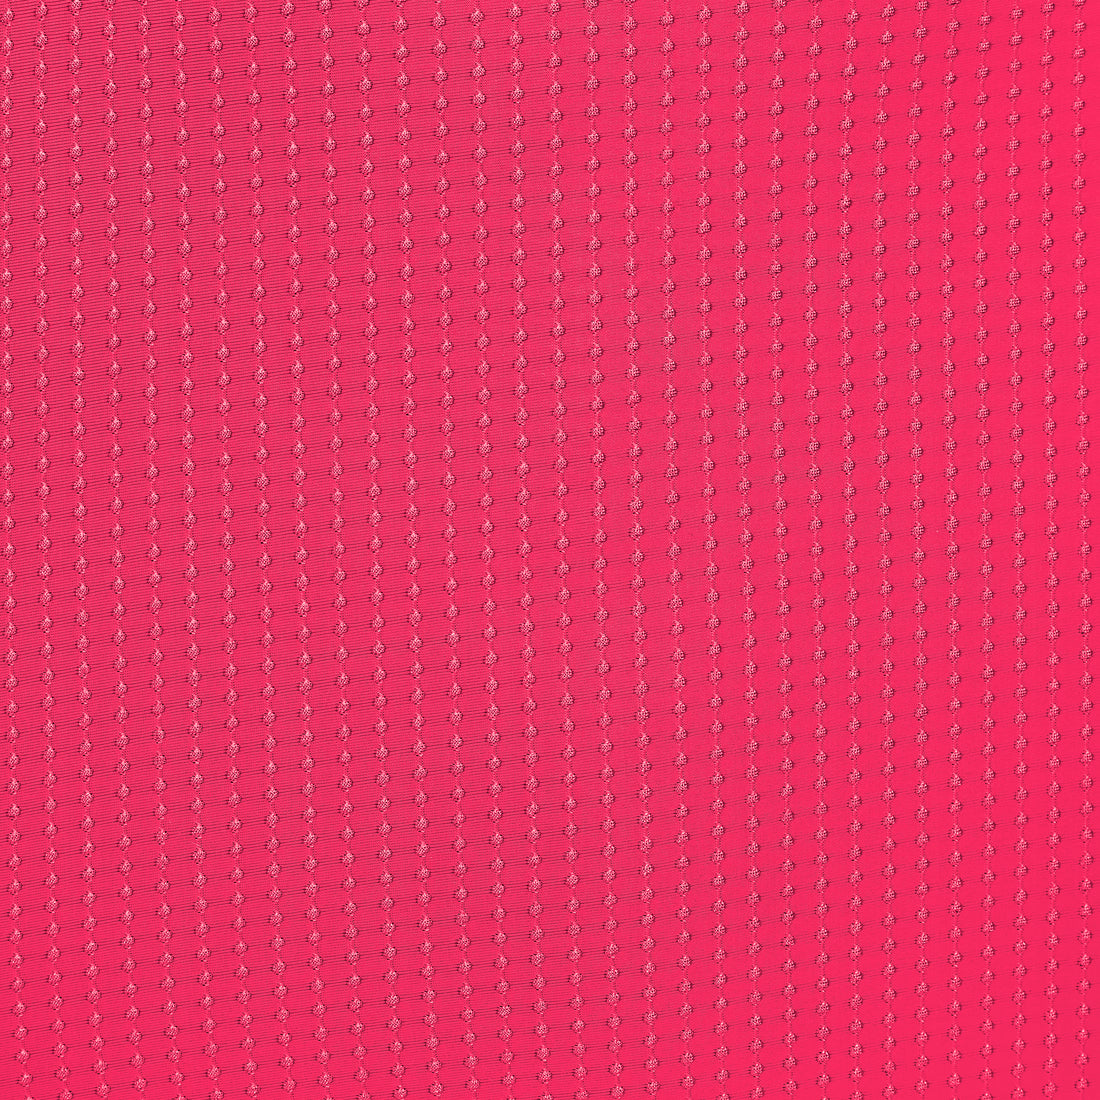 Dots-Virtual-Pink Scrunchie